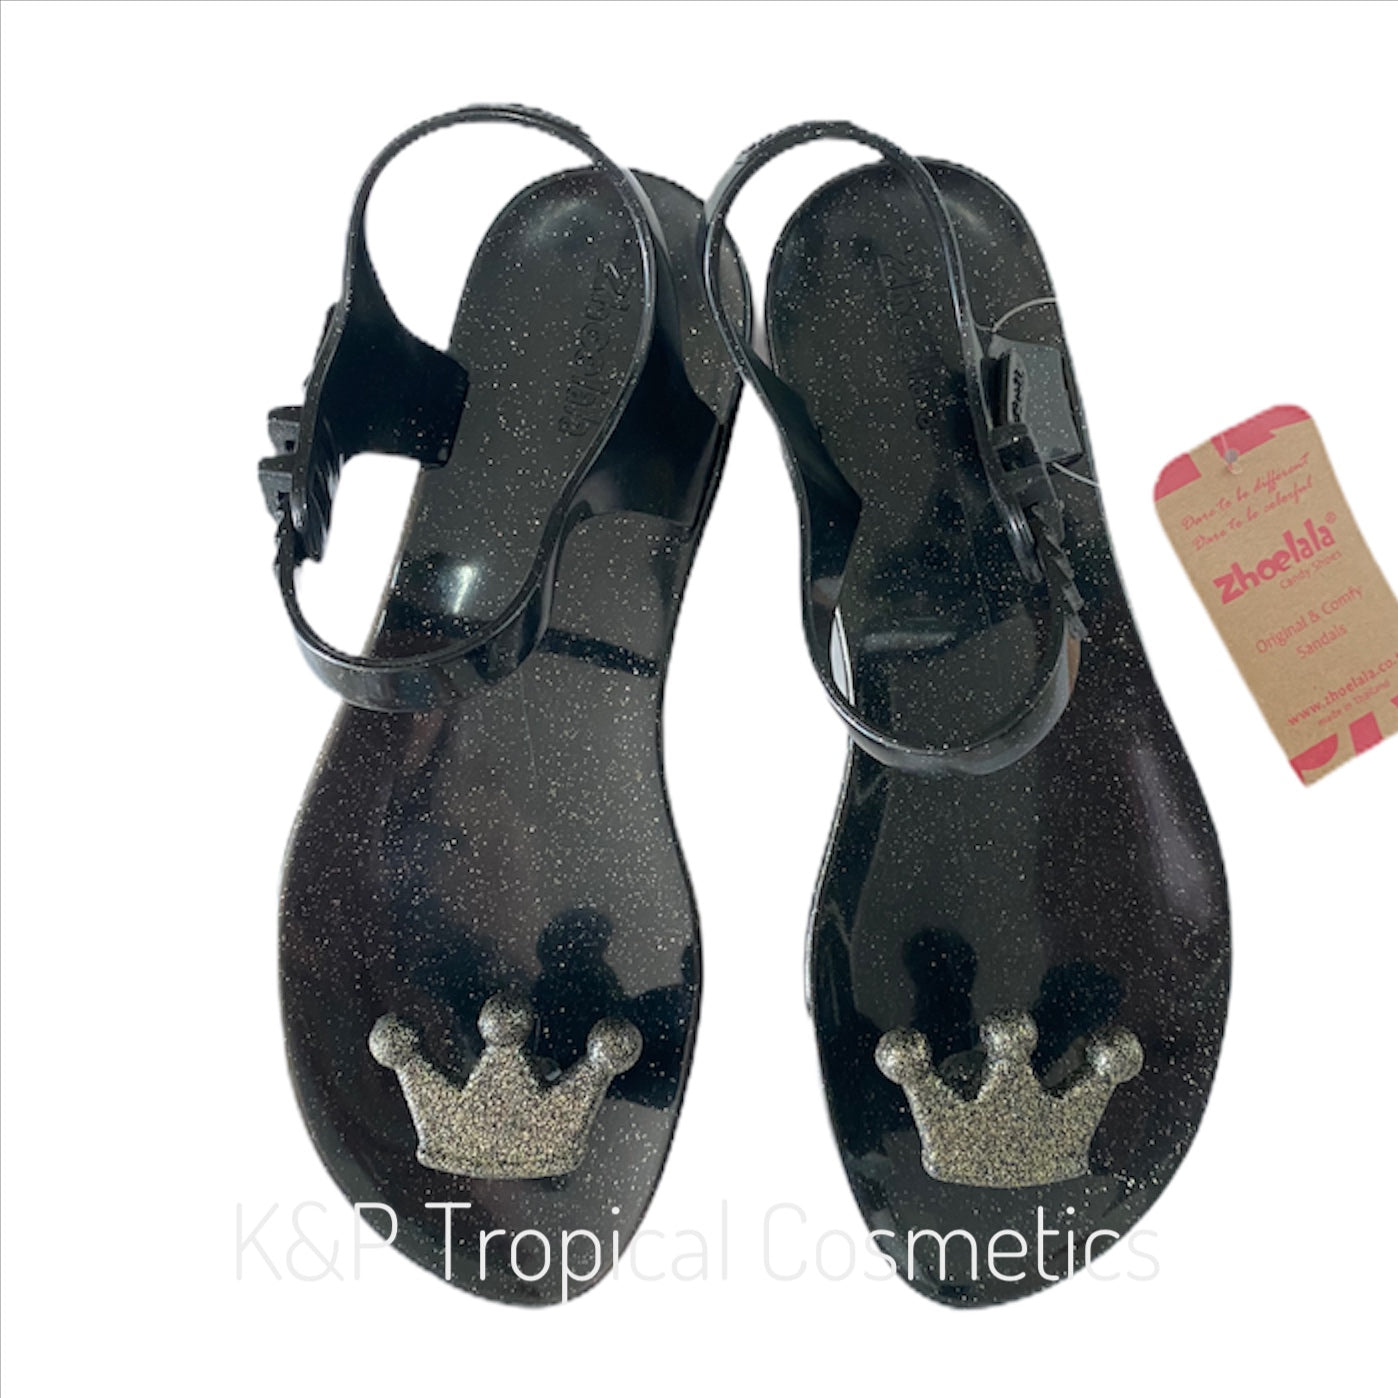 ZHOELALA PRINCESS women's sandals, Сандалии женские "Принцесса" Черное золото